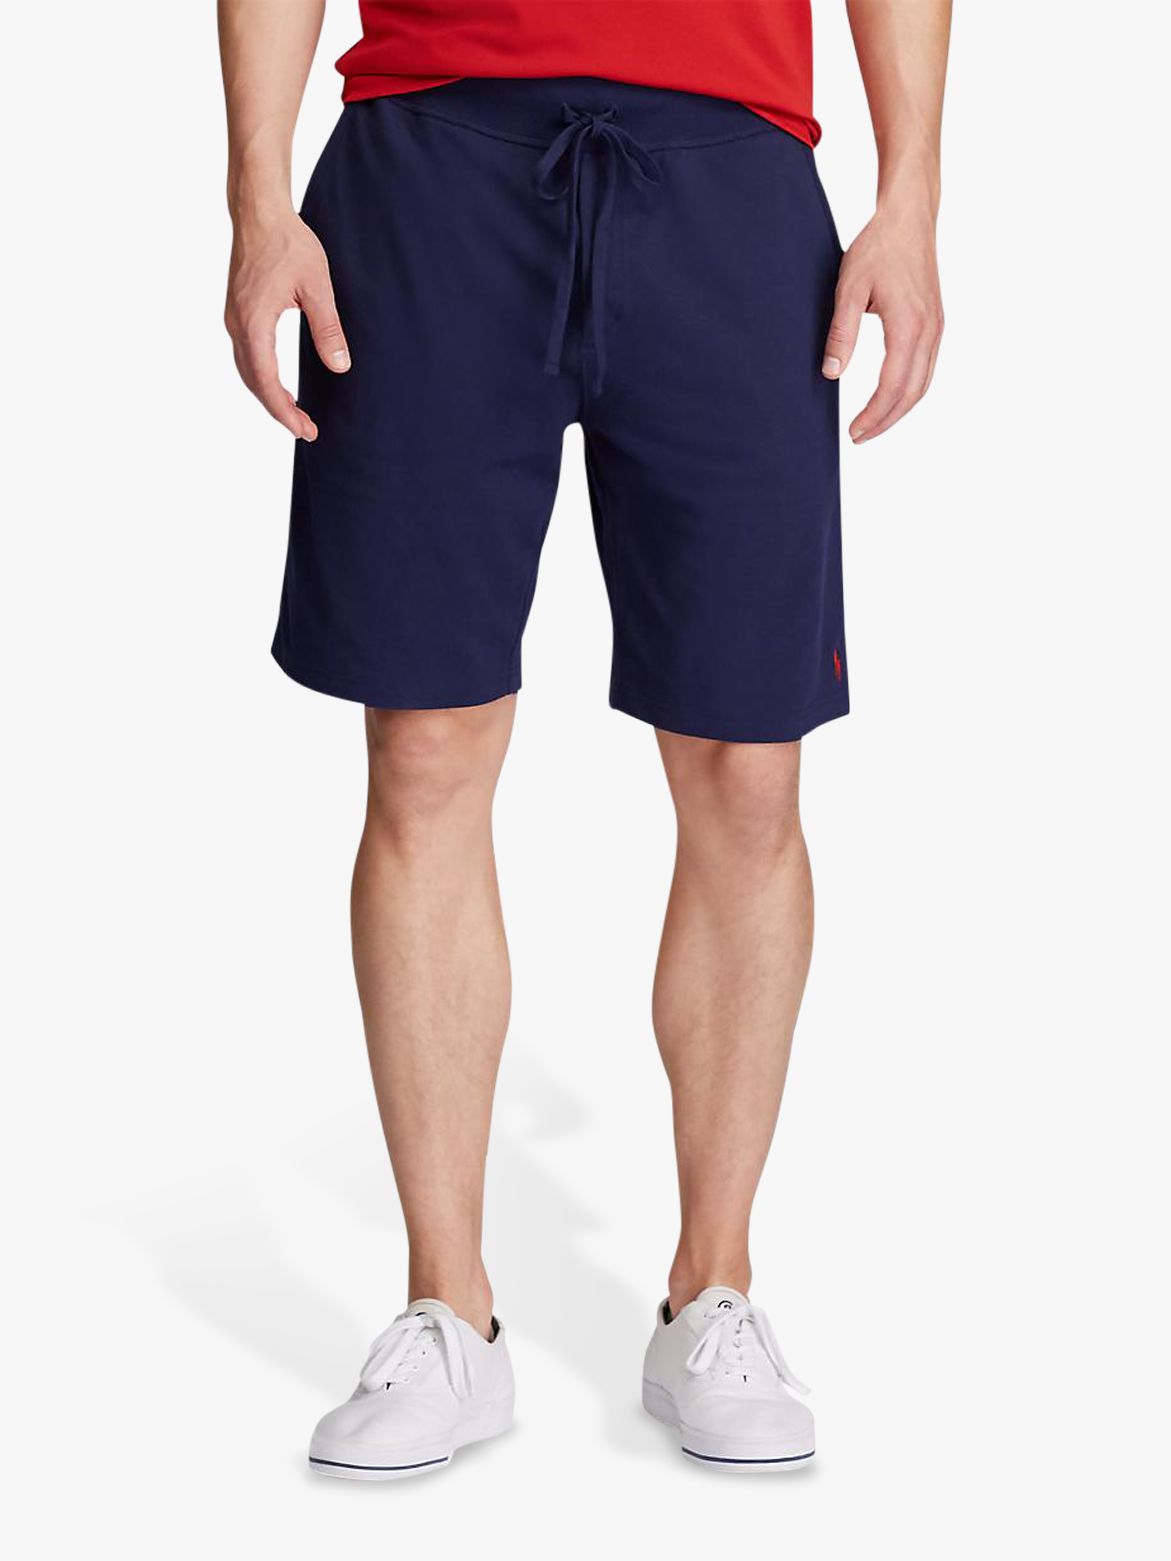 polo mesh shorts